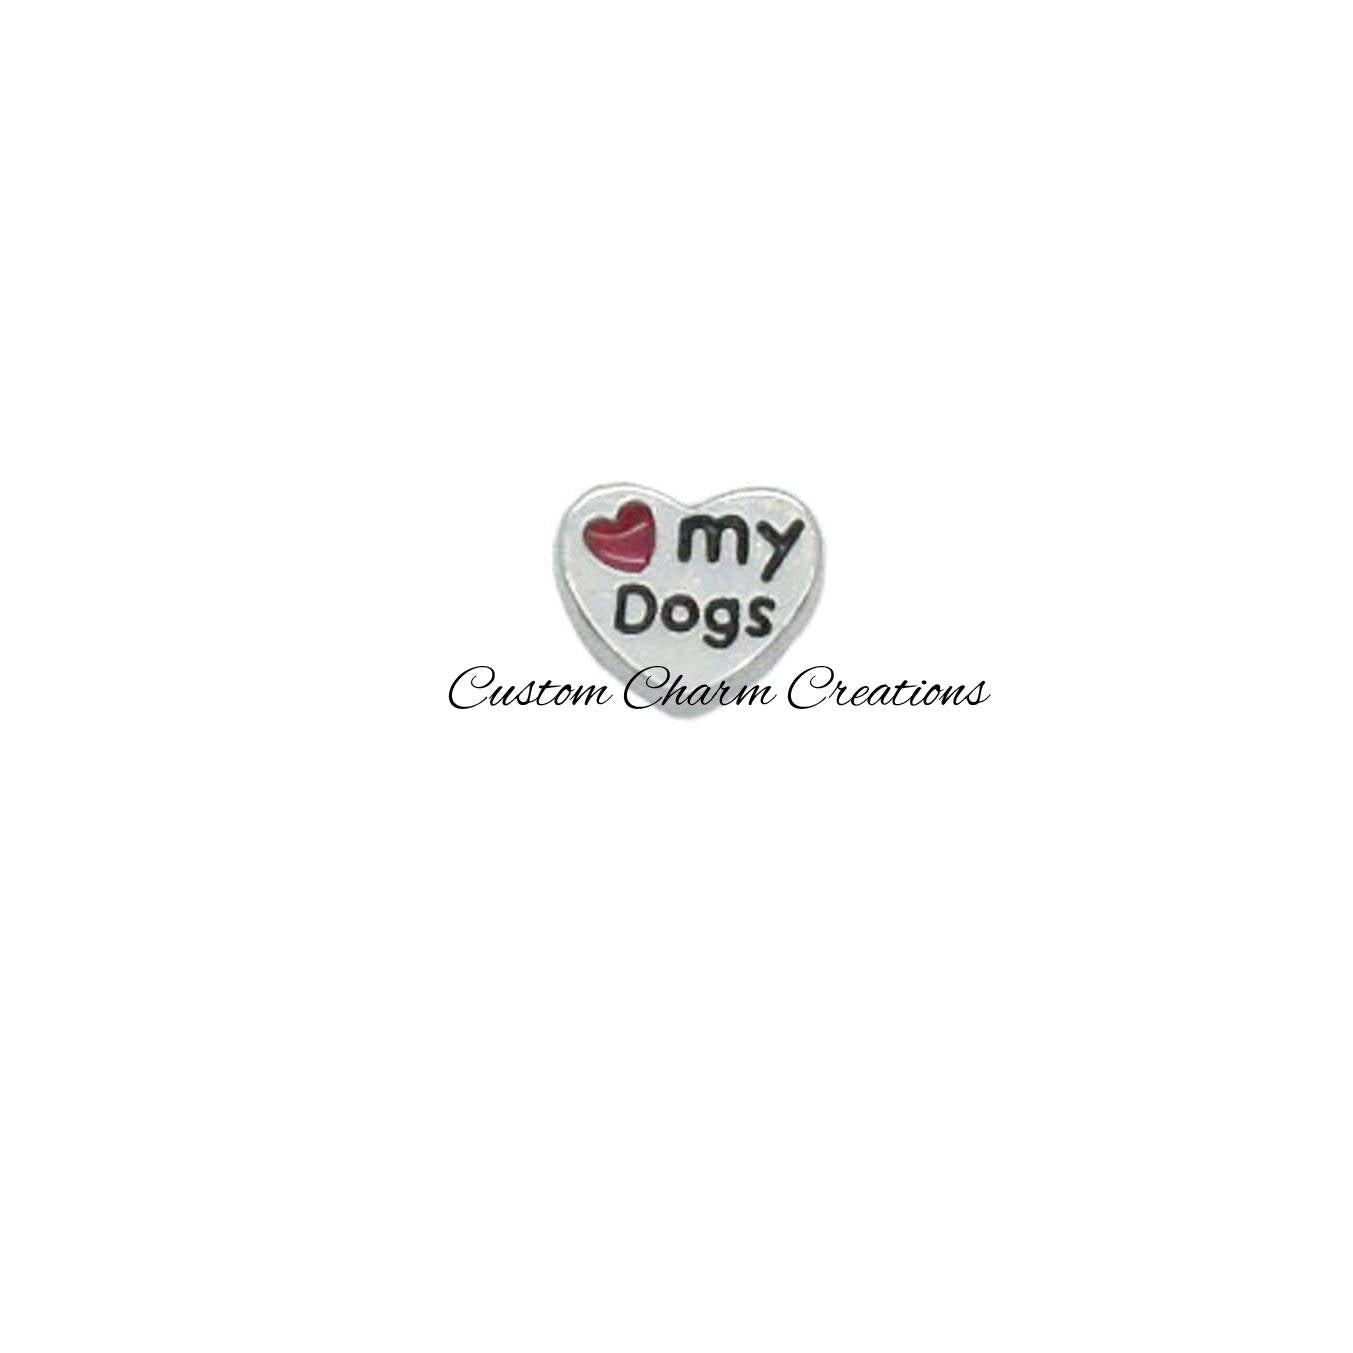 Love my Dogs Floating Locket Charm - Custom Charm Creations